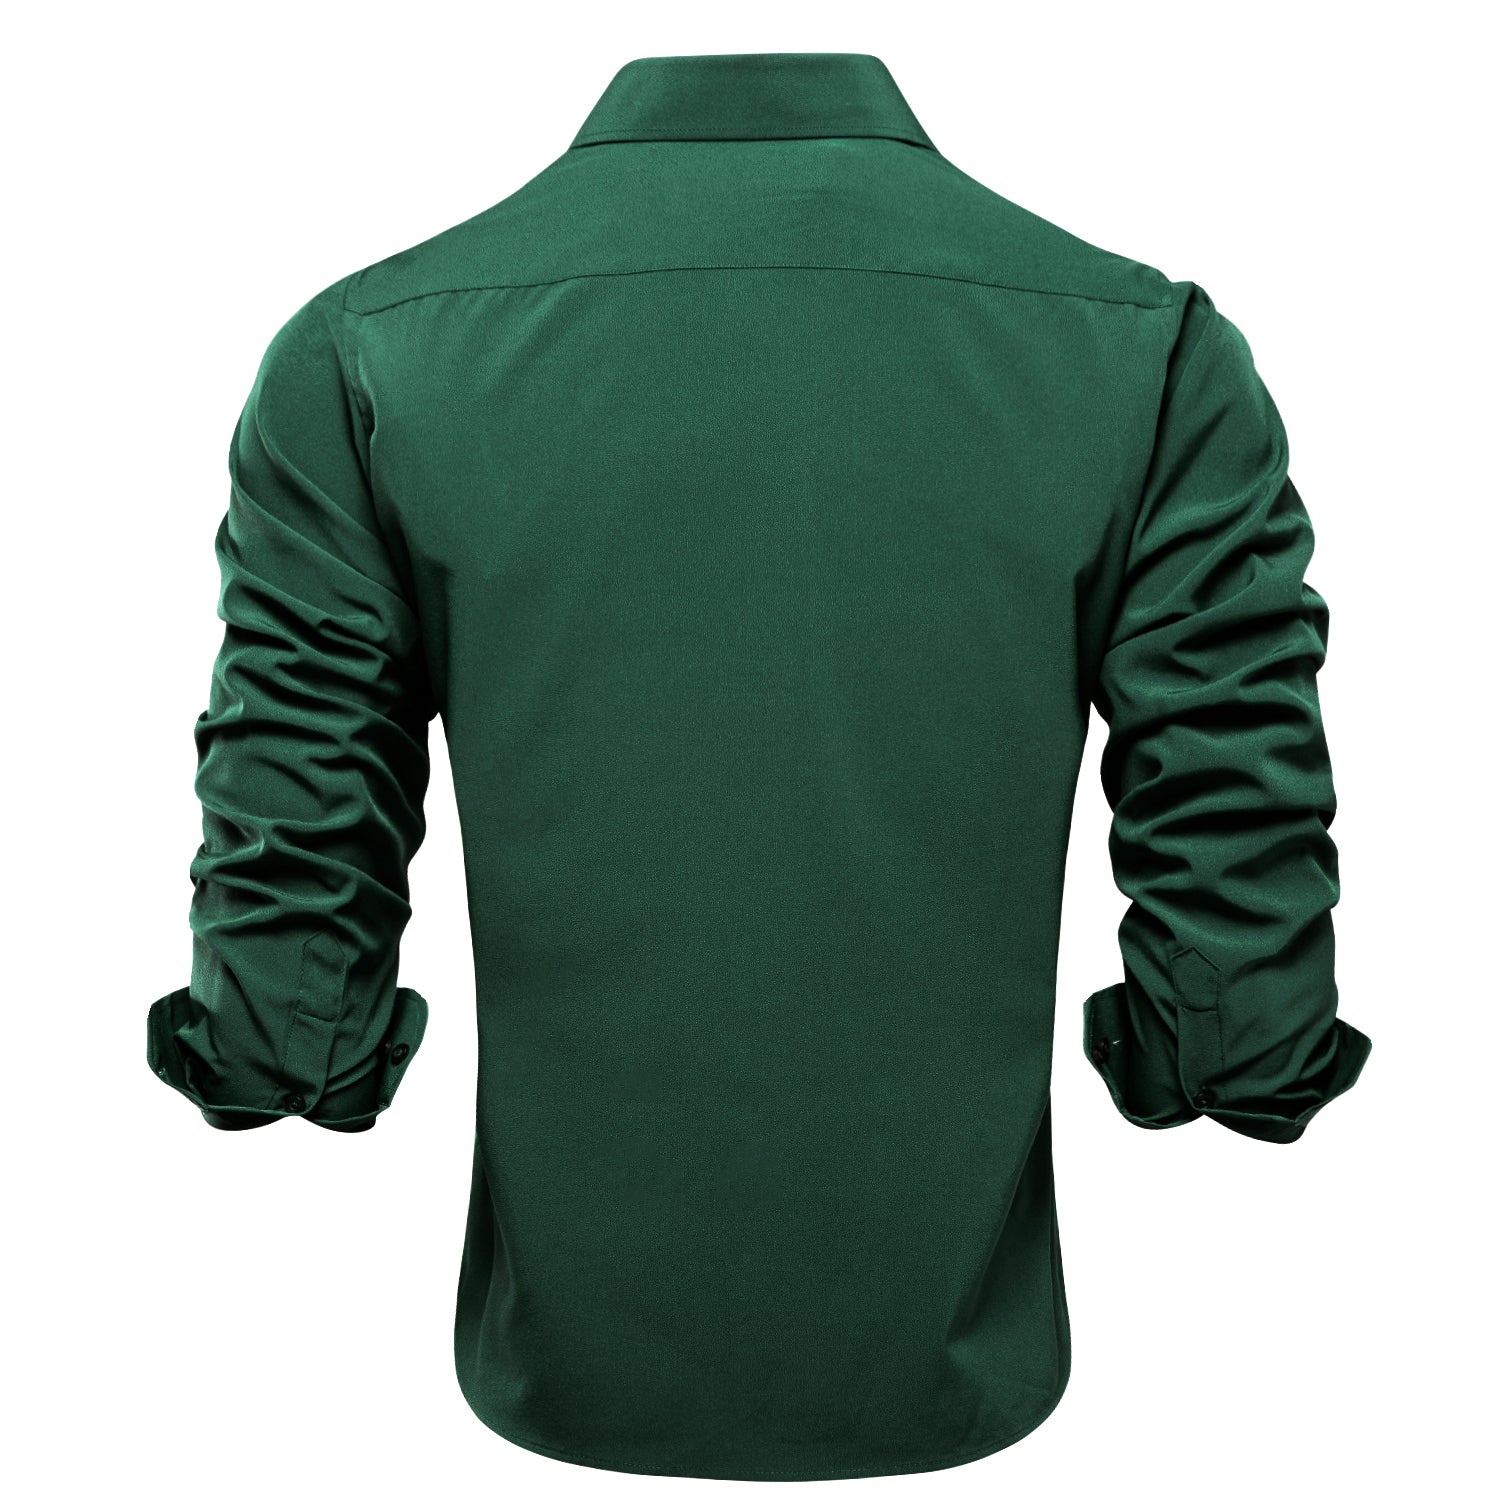 Emerald Green Solid Stretch Men's Long Sleeve Shirt